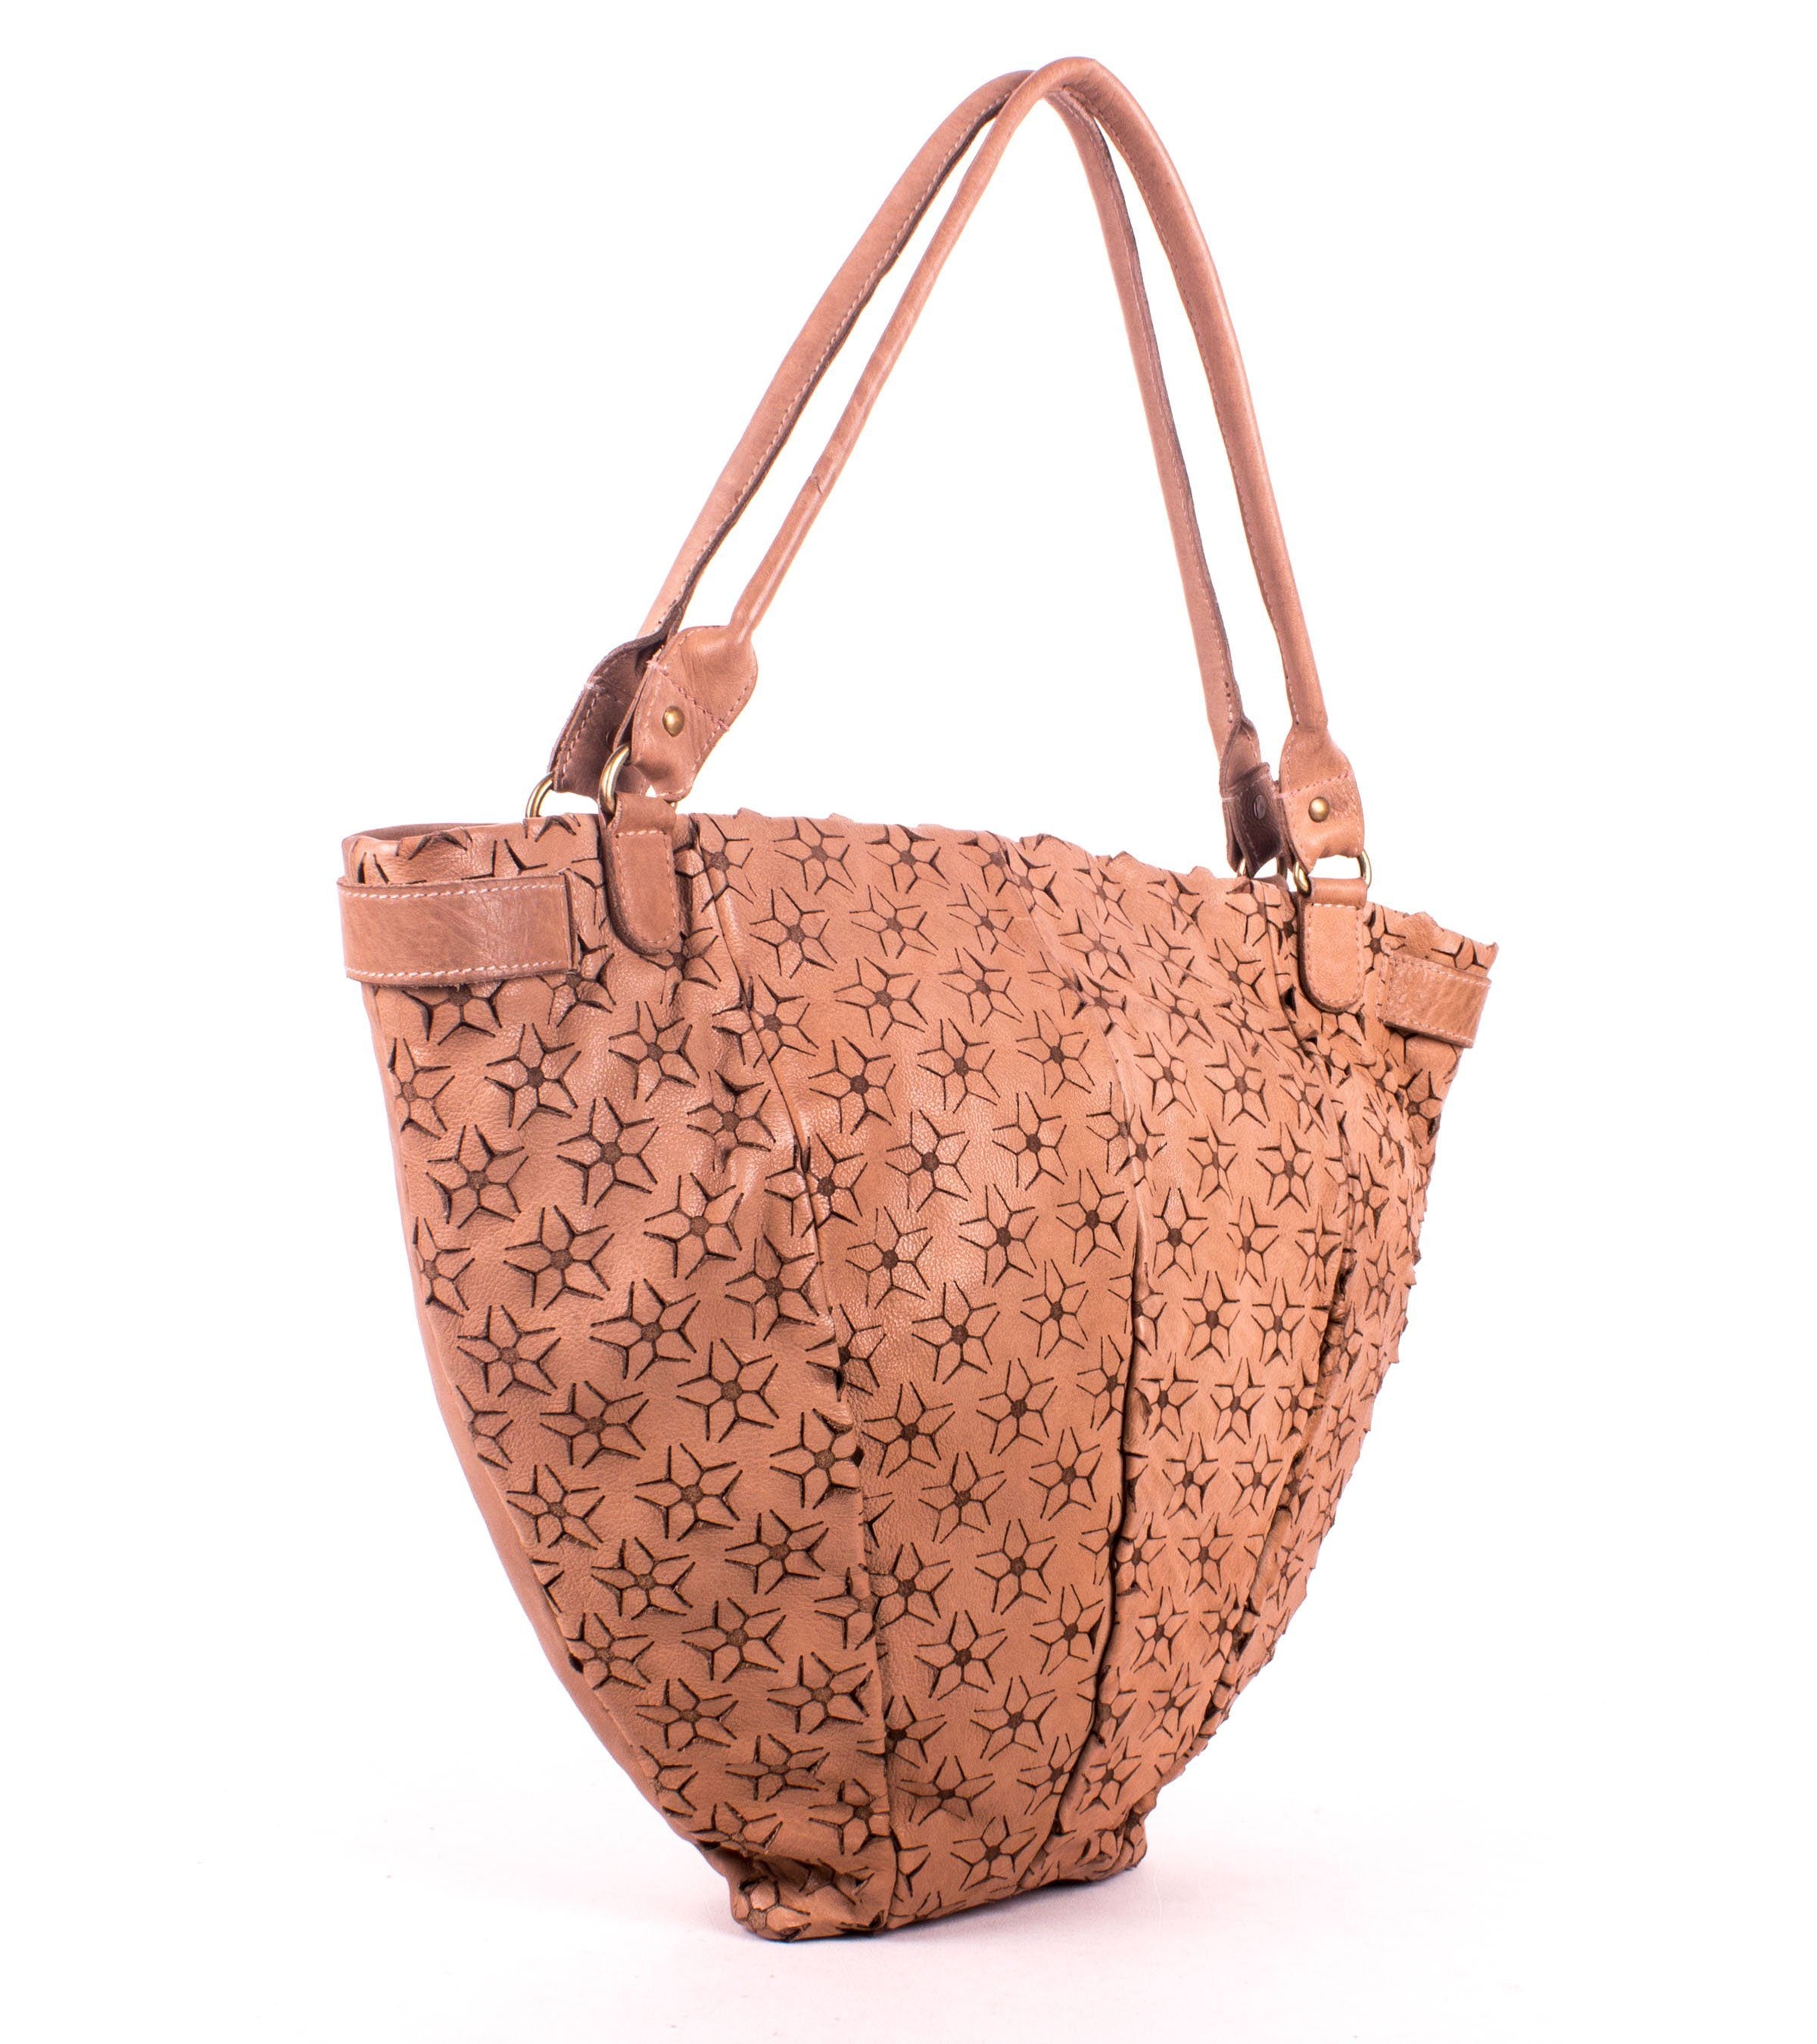 Art N’ Vintage- Women’s milano leather star design shopper bag